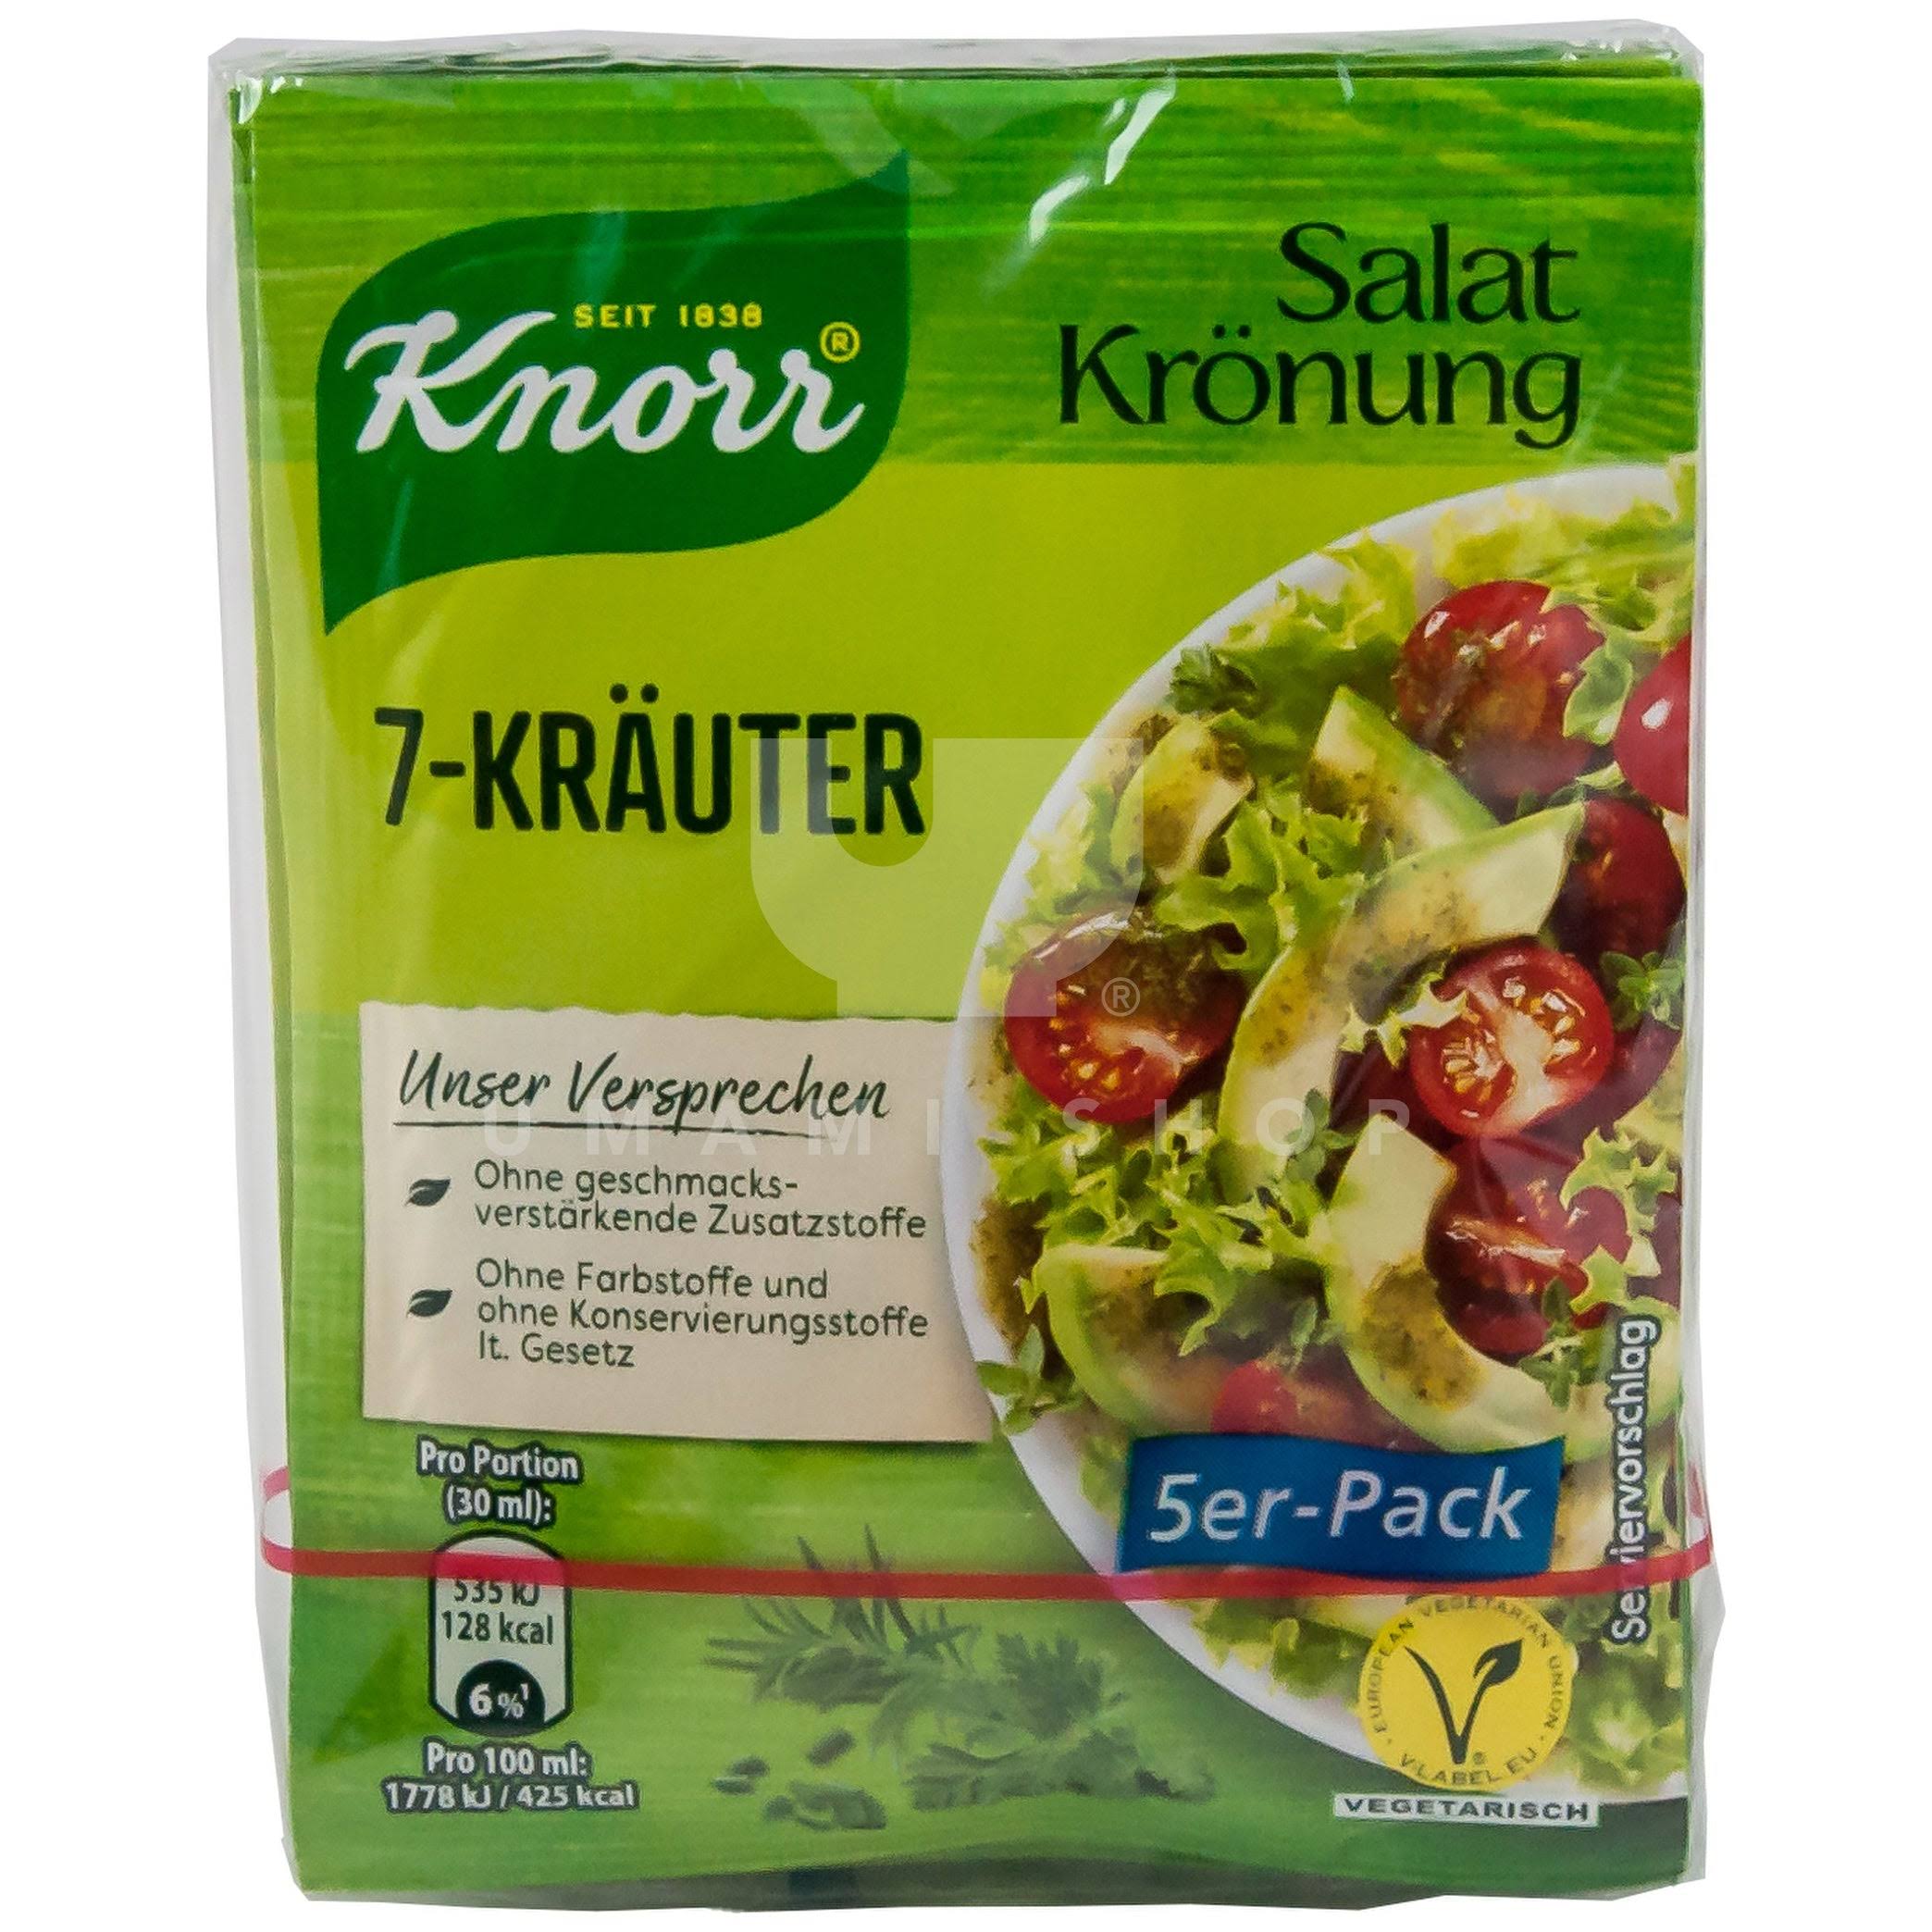 Knorr Salat Kronung 7-Krauter 7 Herbs salad dressing (pack of 5 sachet